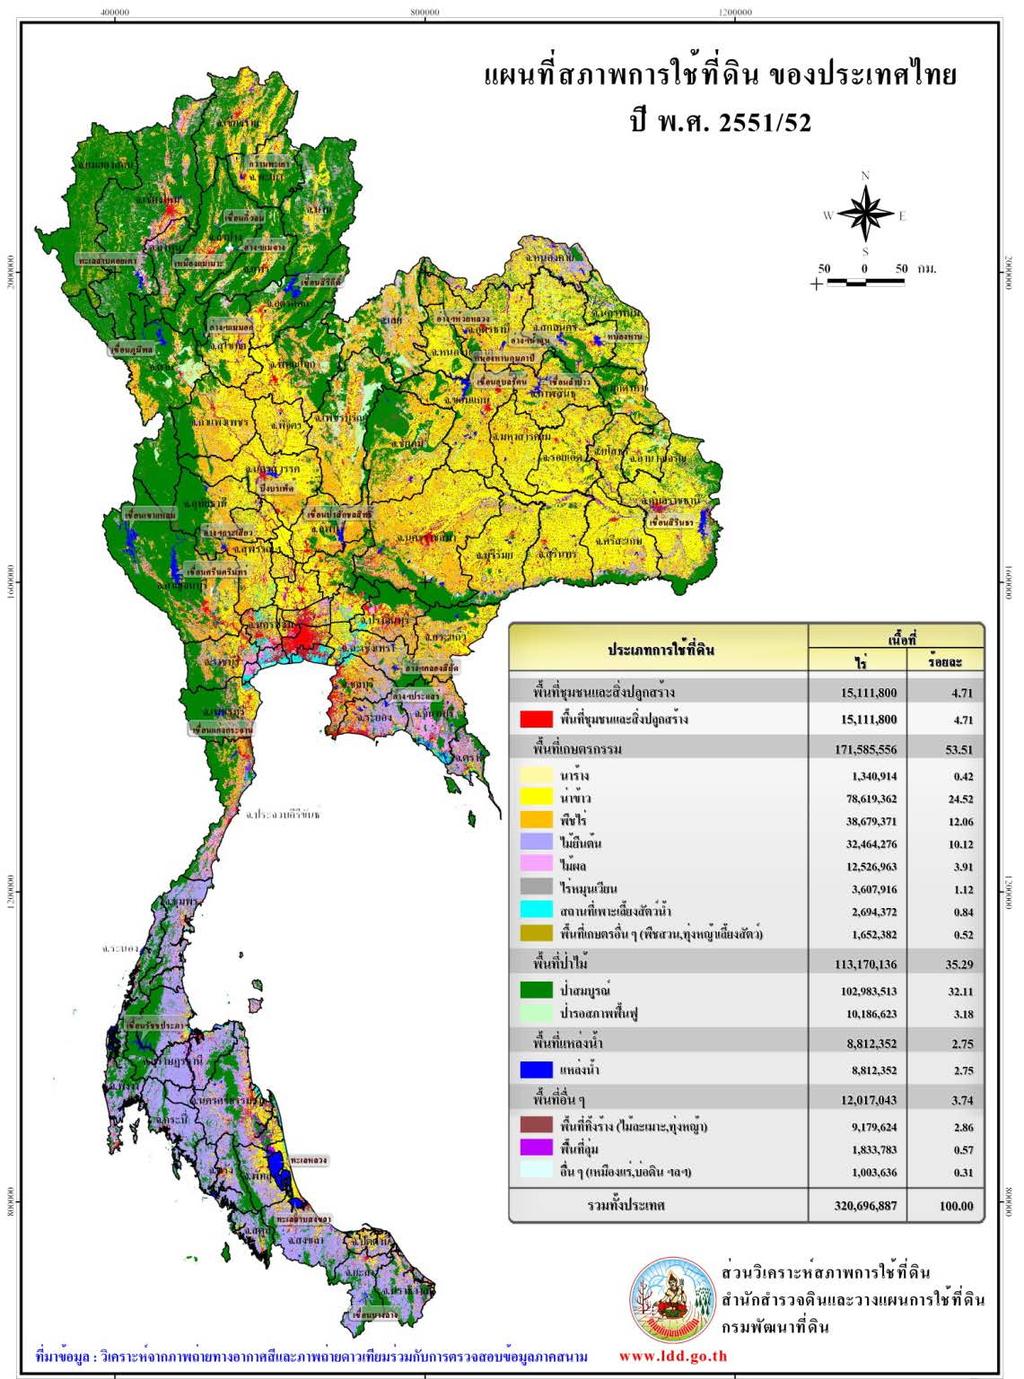 Land Use of Thailand